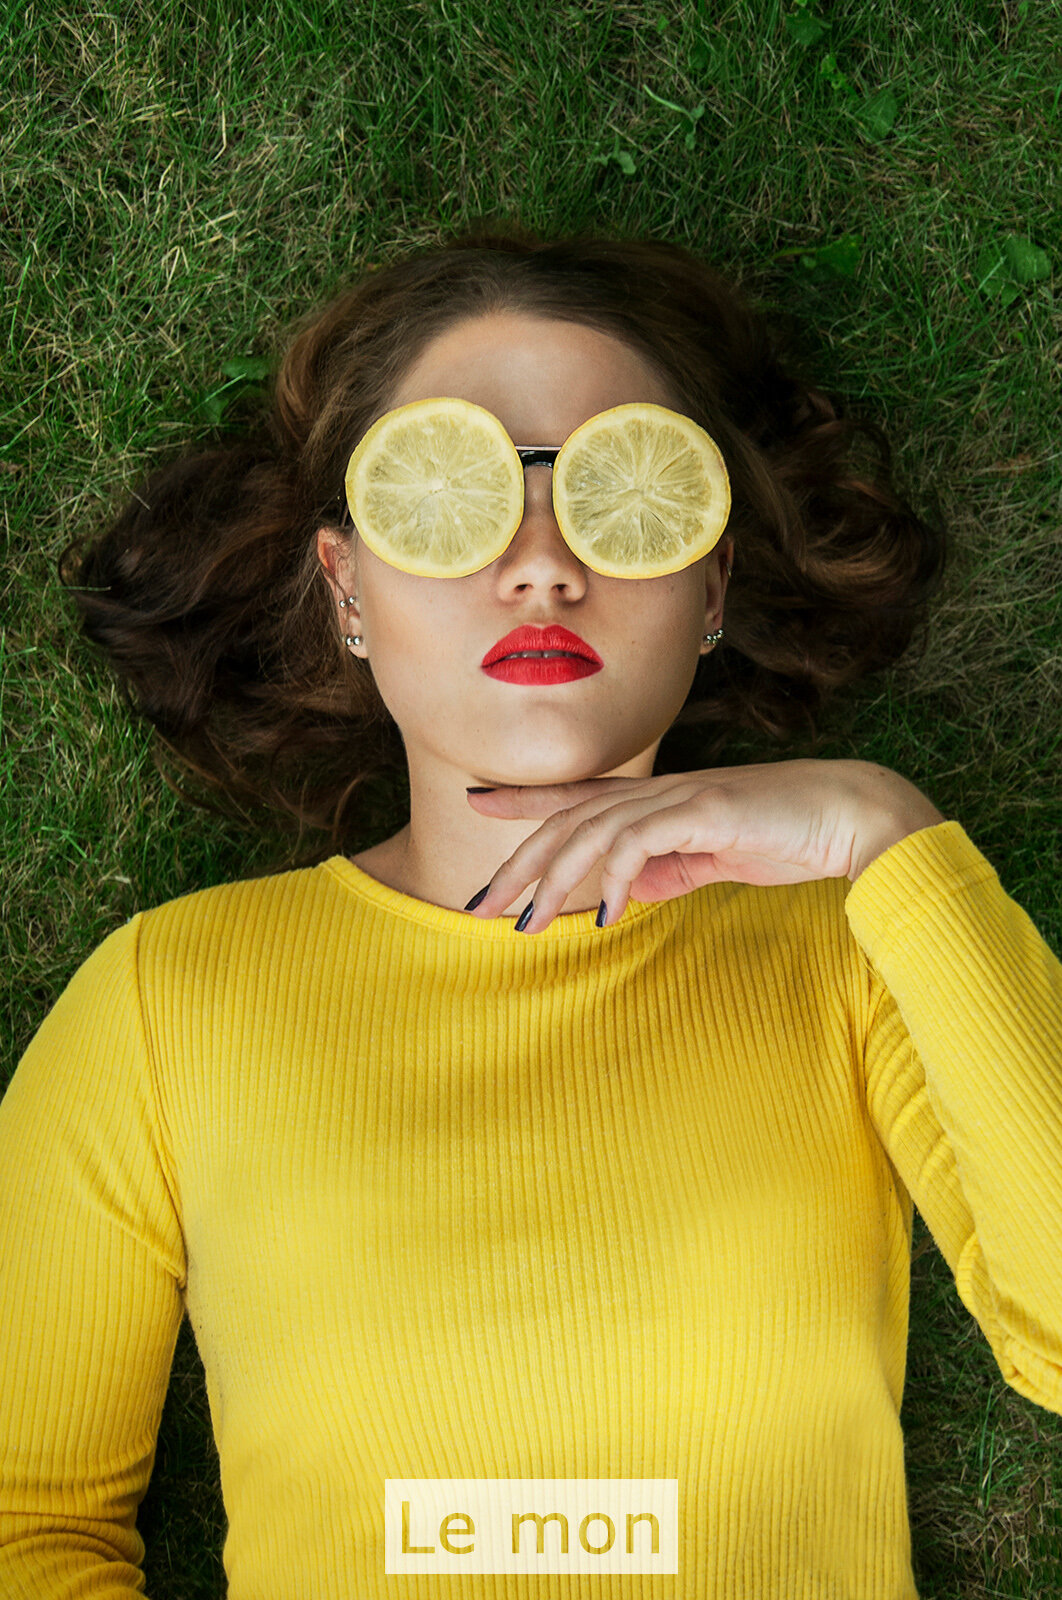 Le Mon by Natalie K. © photo retoucher toronto retro girl with red lipstick and yellow lemon sunglasses.jpg